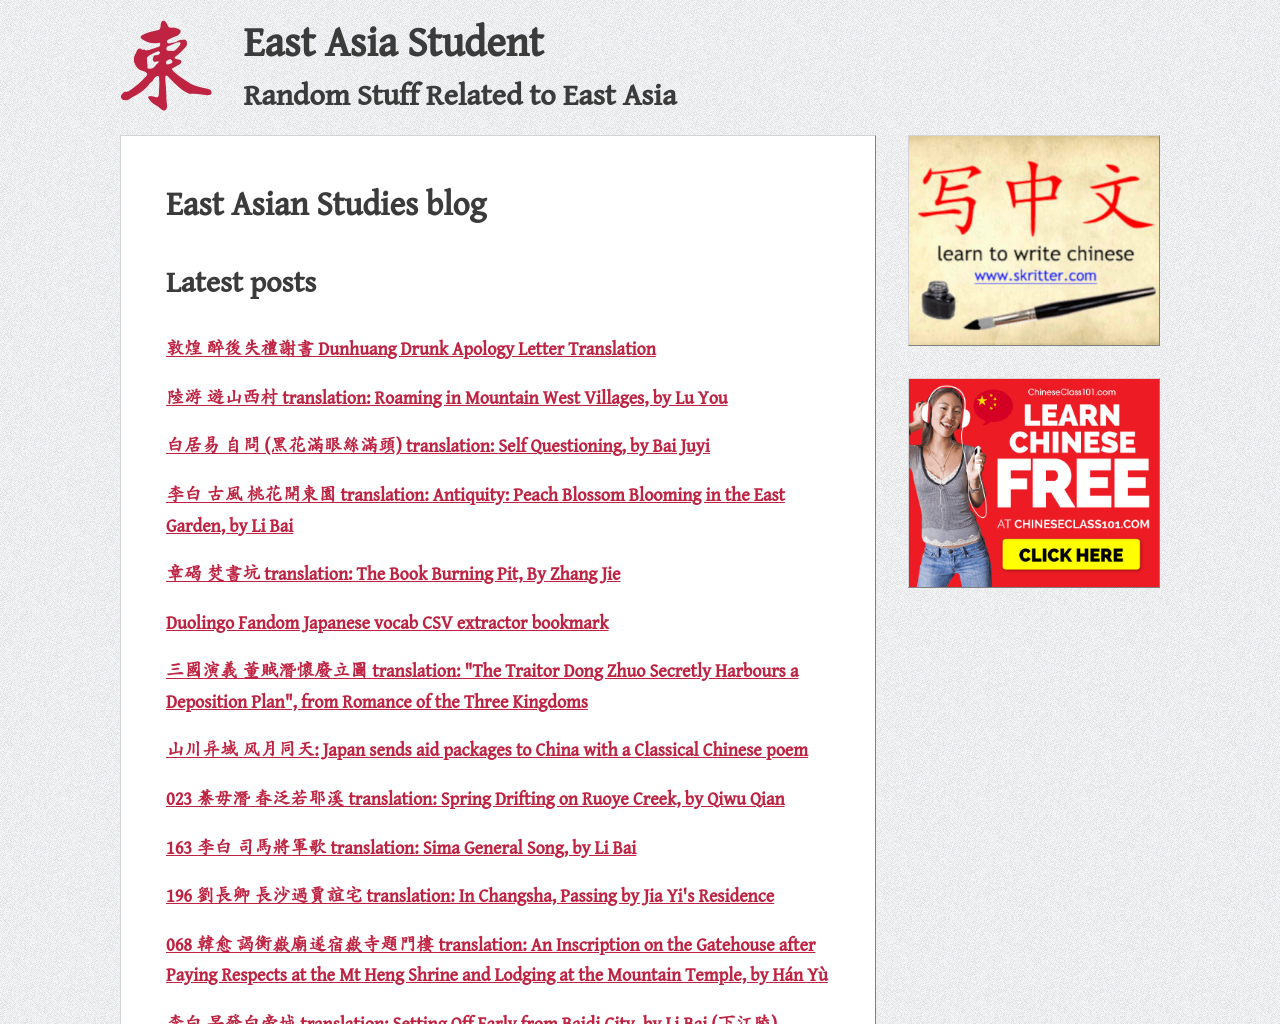 eastasiastudent.net